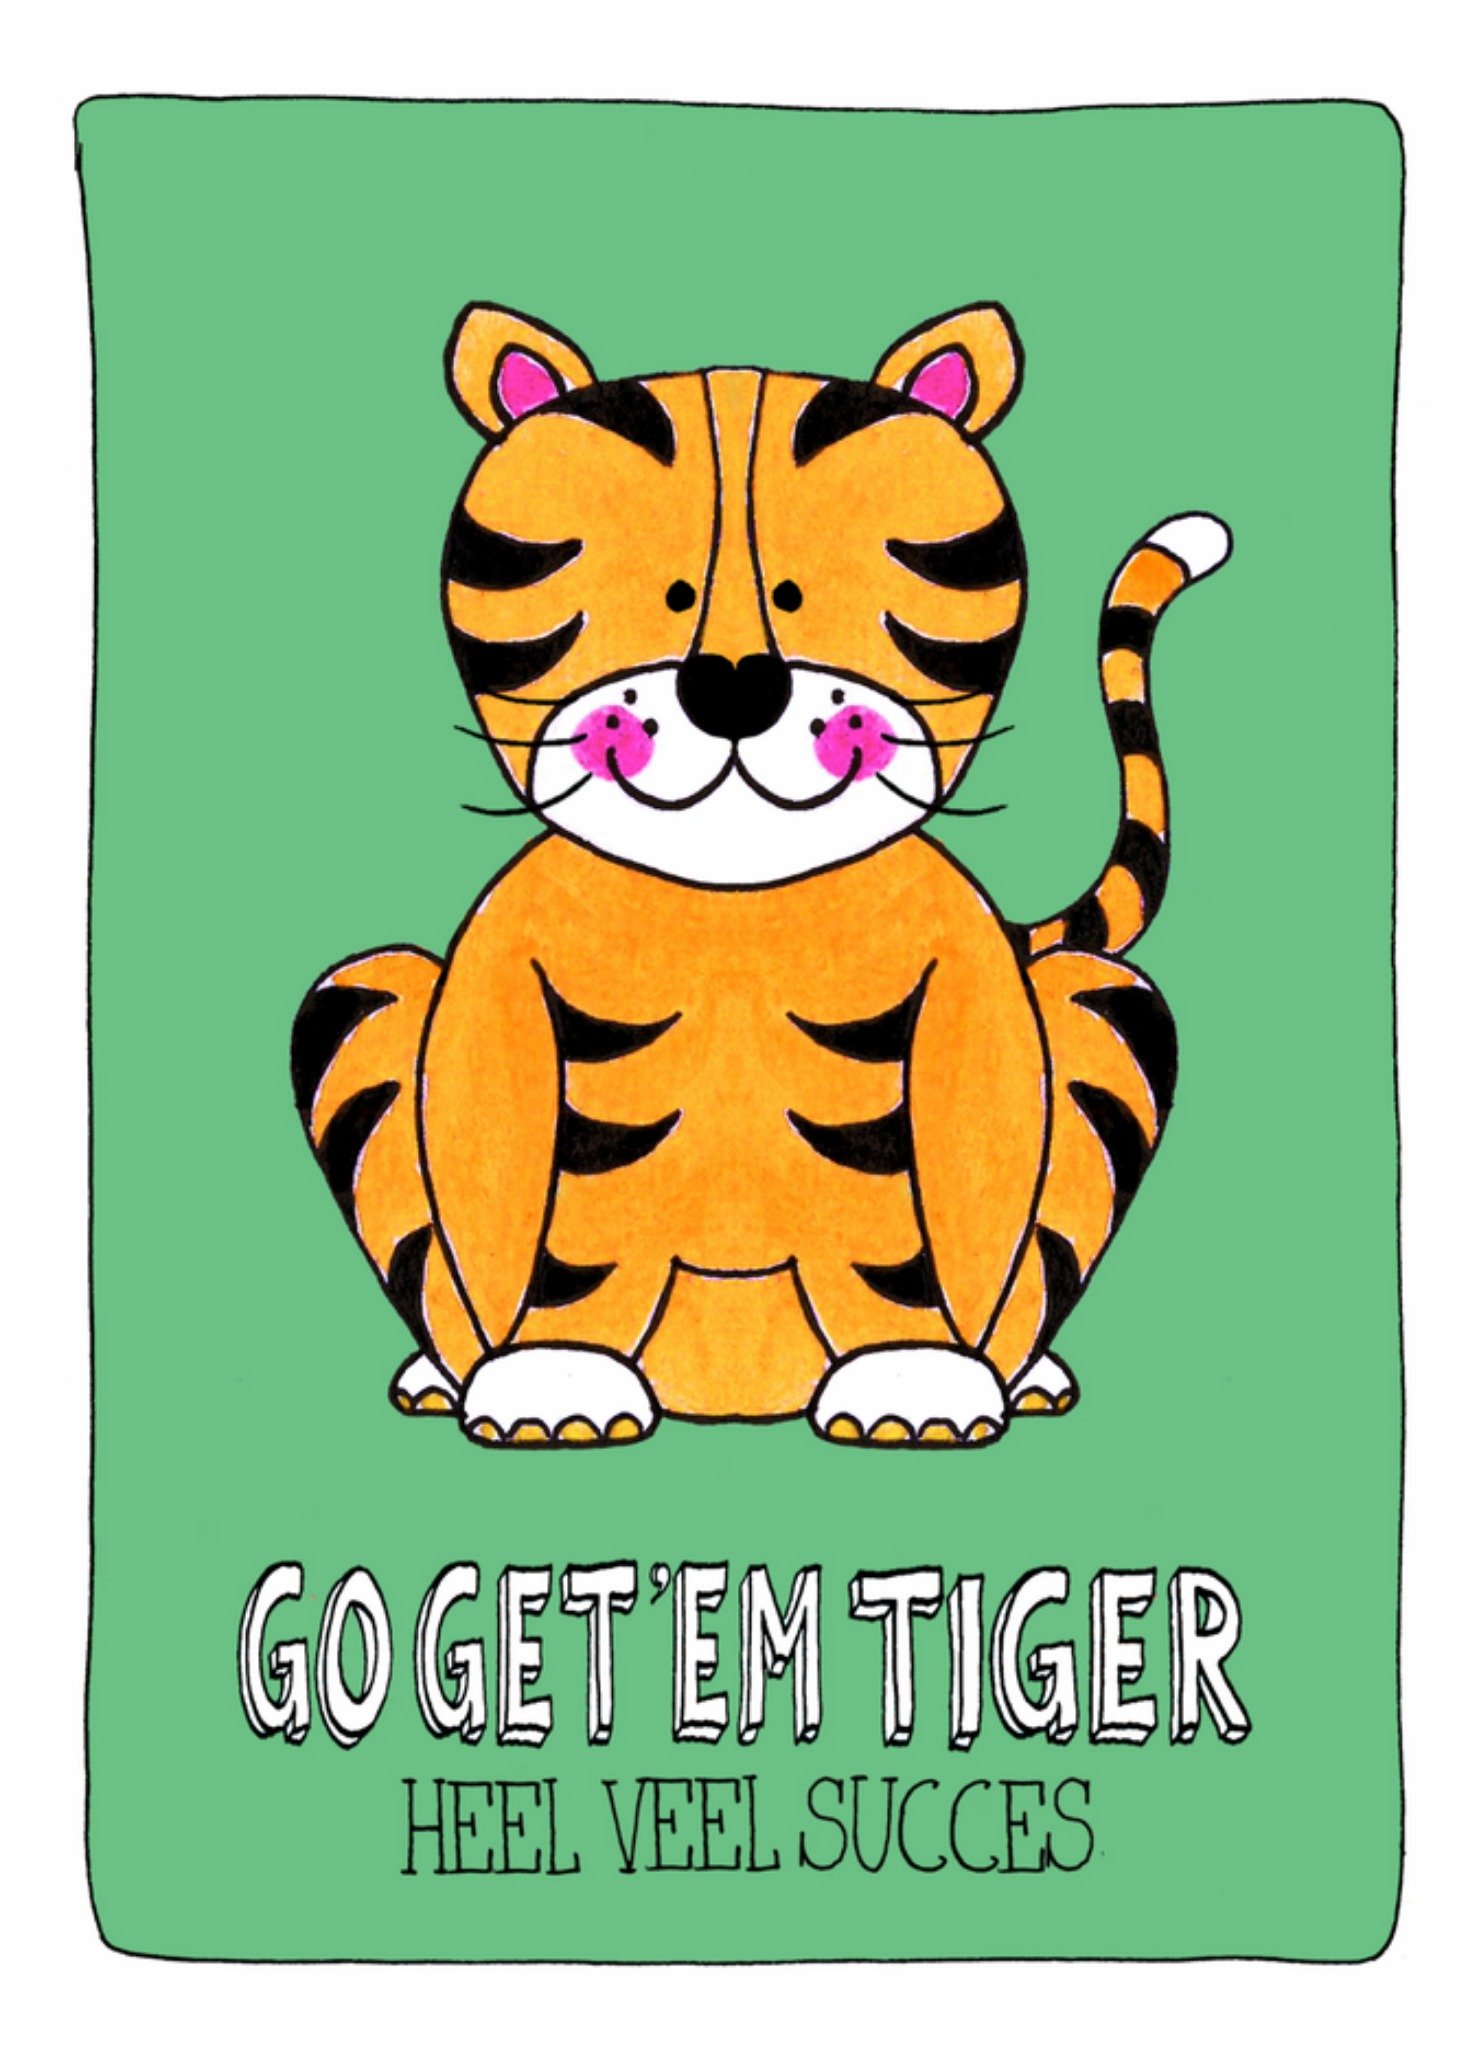 Sandysign - Succeskaart - Go get 'em tiger